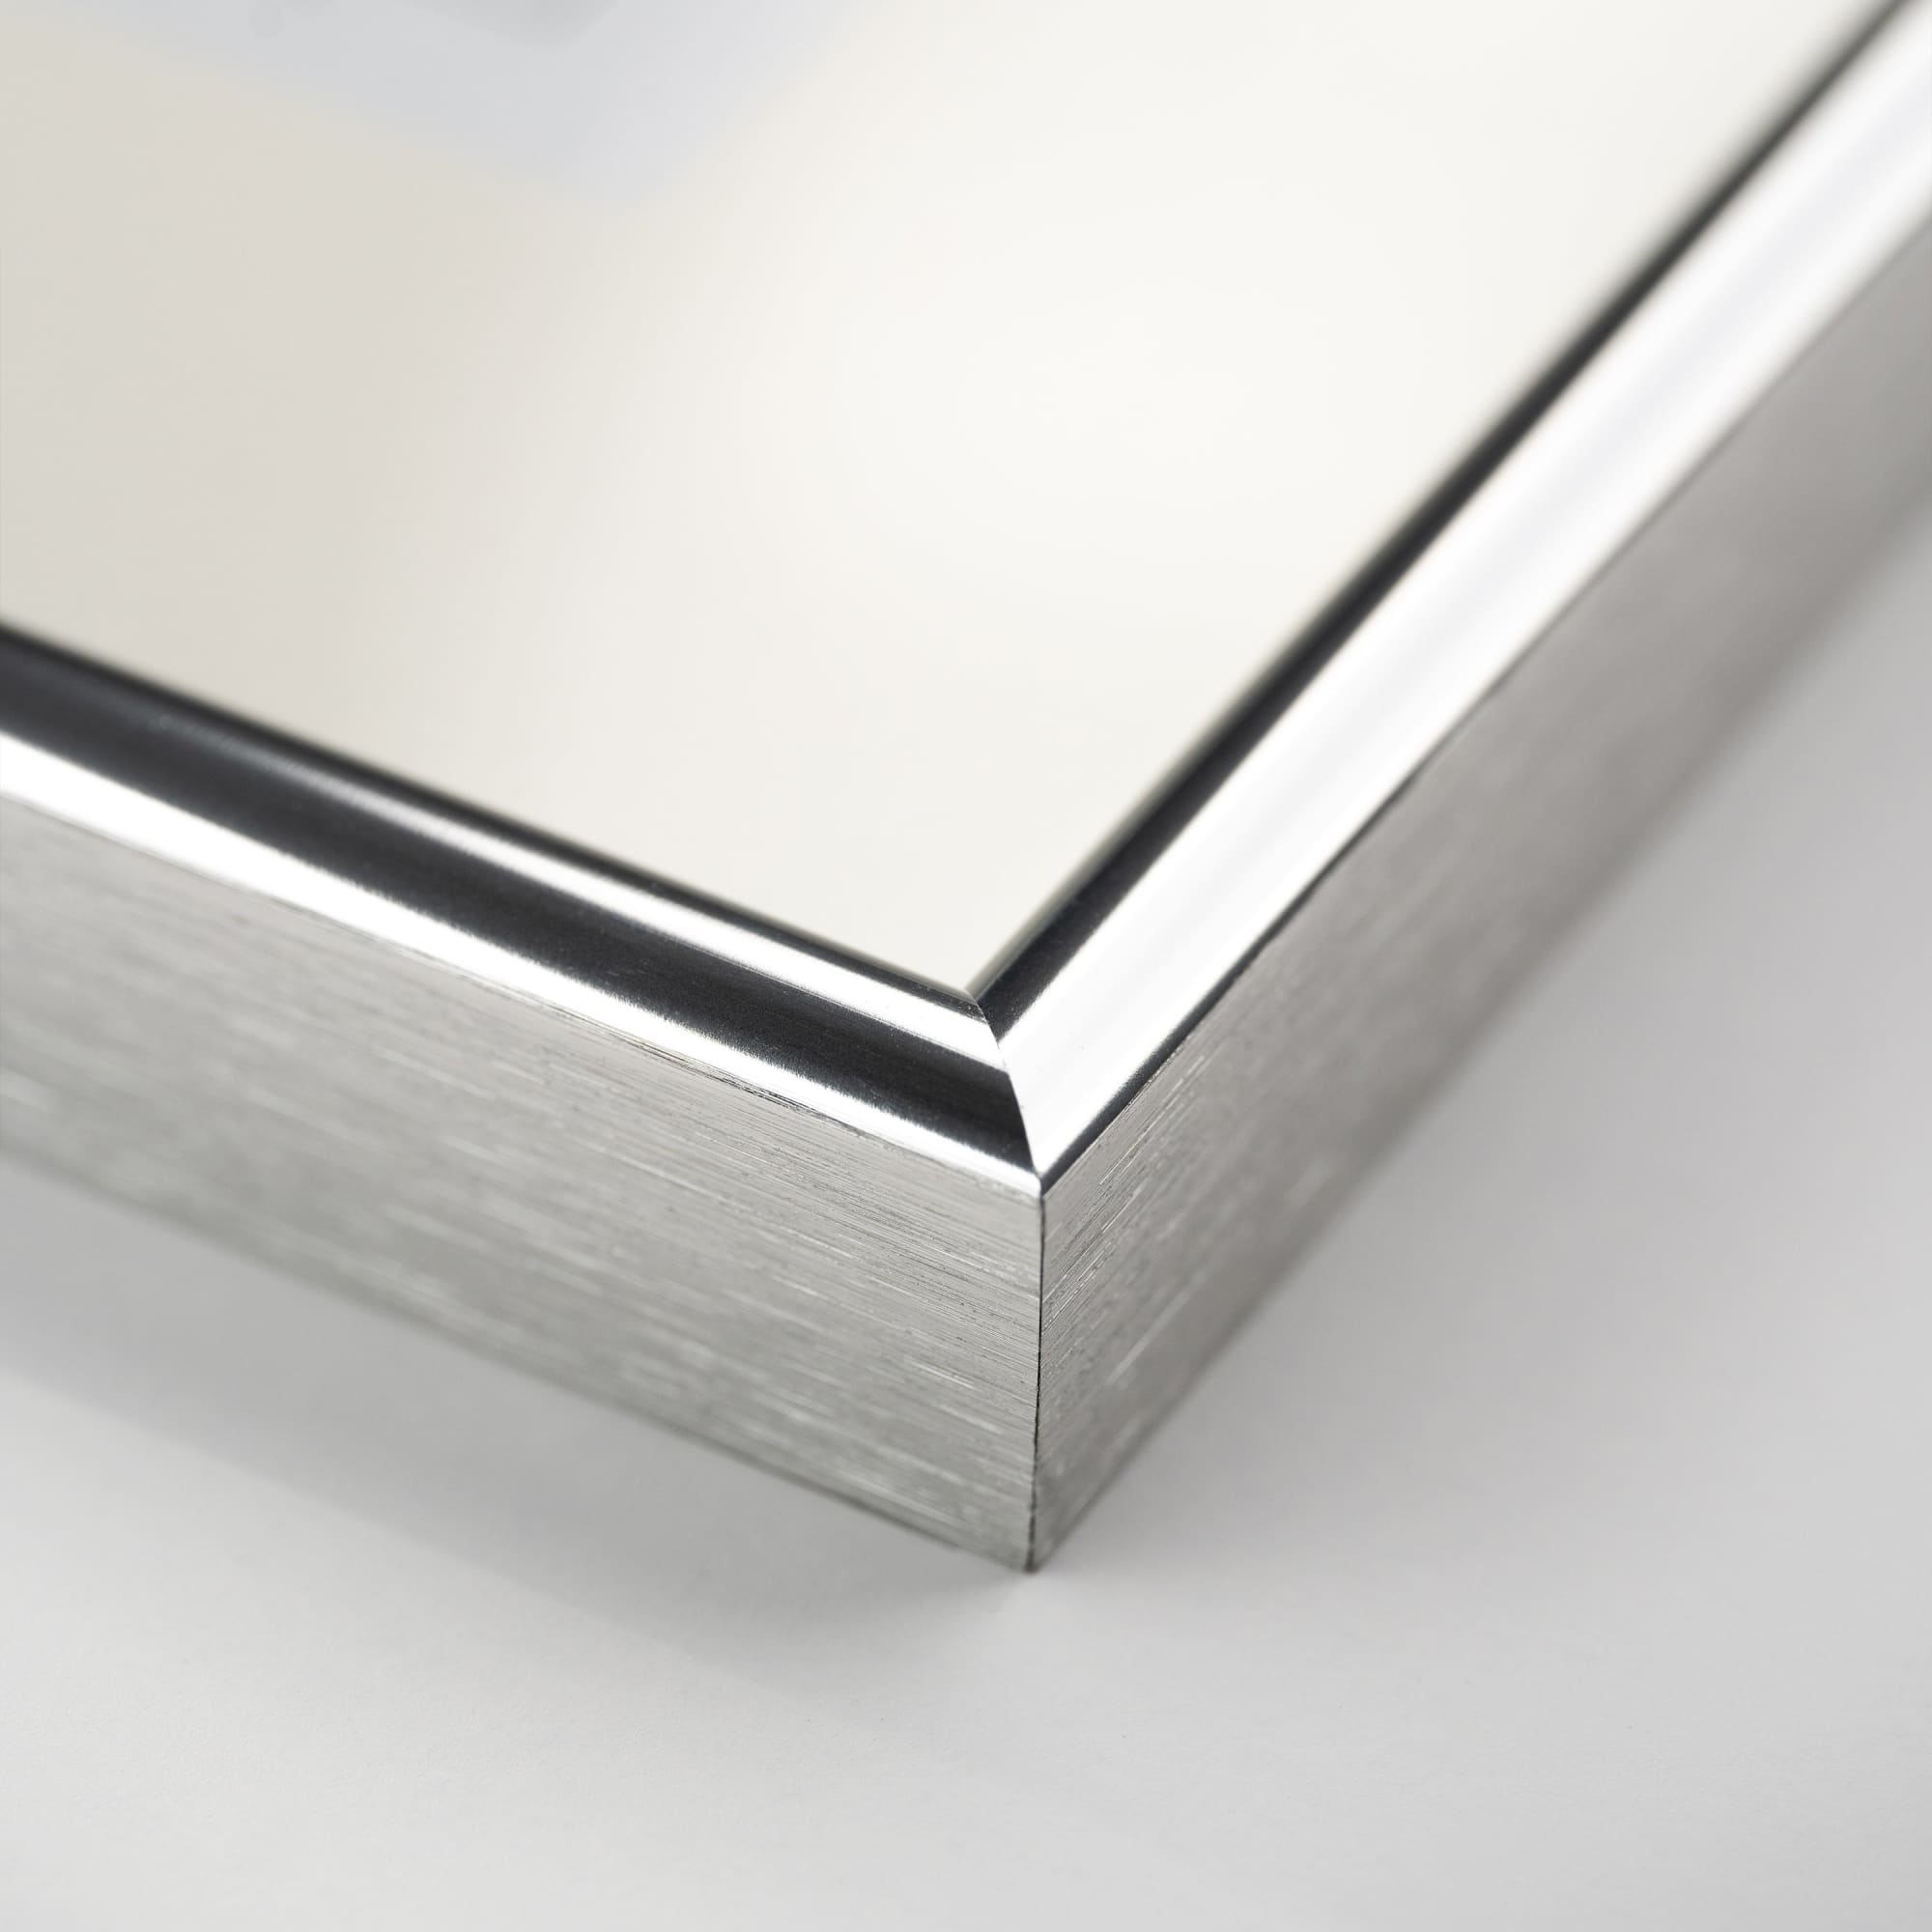 Metallic Shiny Silver Frame | Frame USA